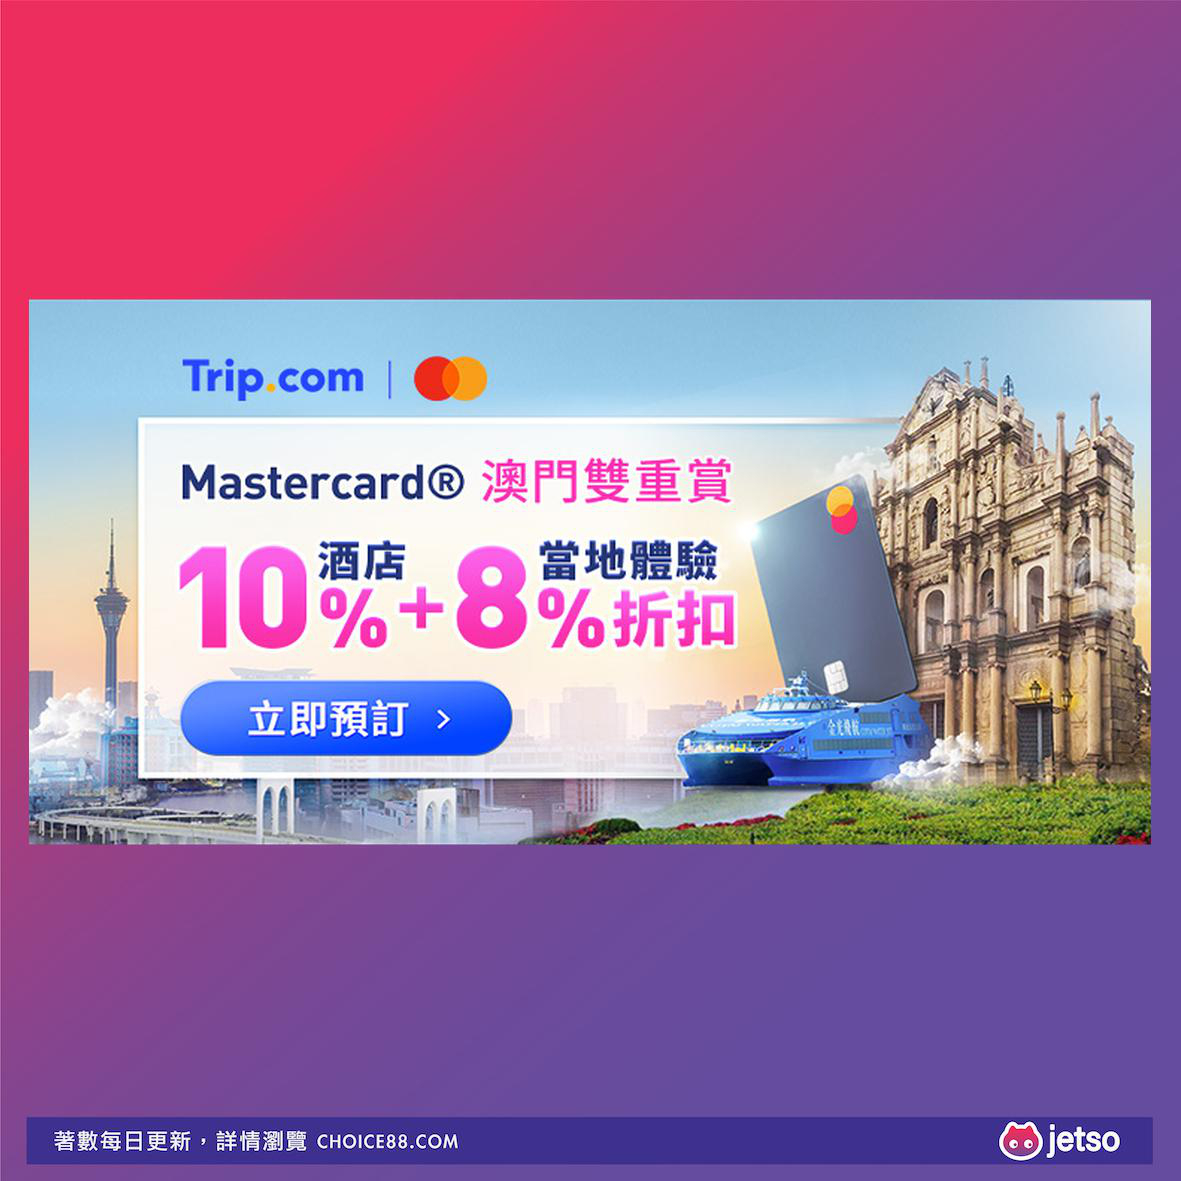 Trip.com : Mastercard® 澳门游双重奖赏